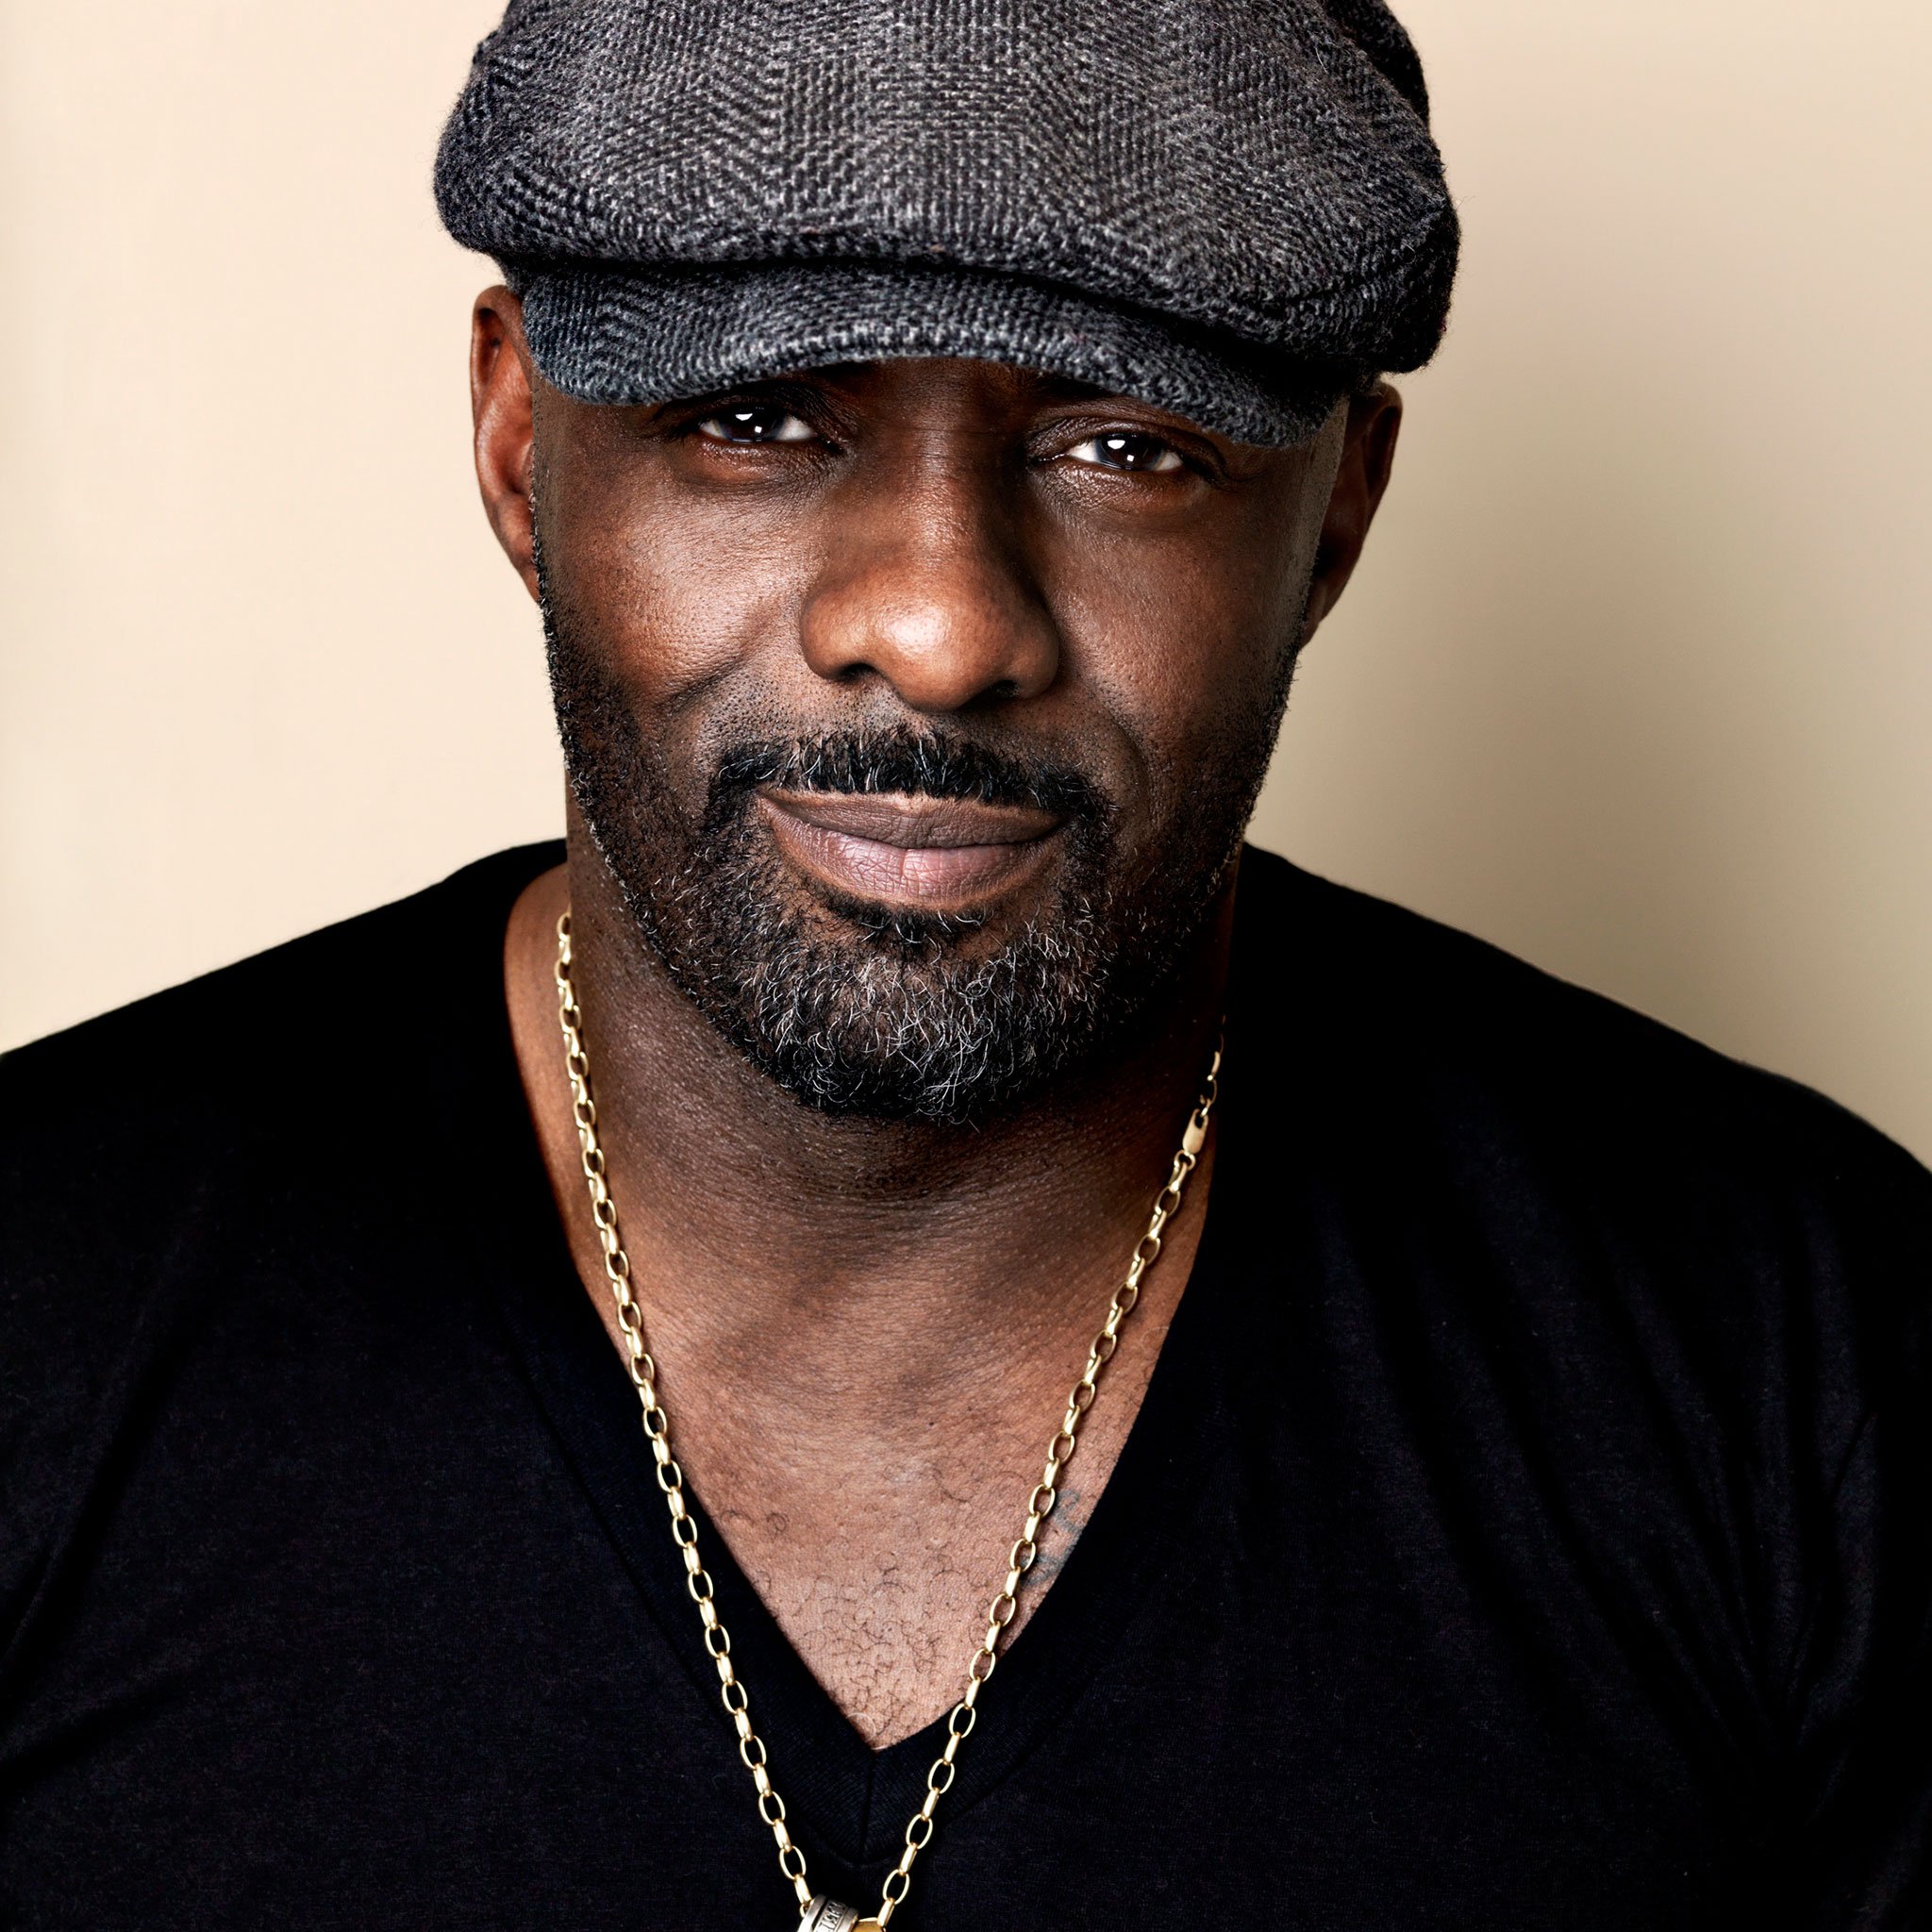 Idris Elba The World Isn T Ready For A Black James Bond The Hollywood Digest